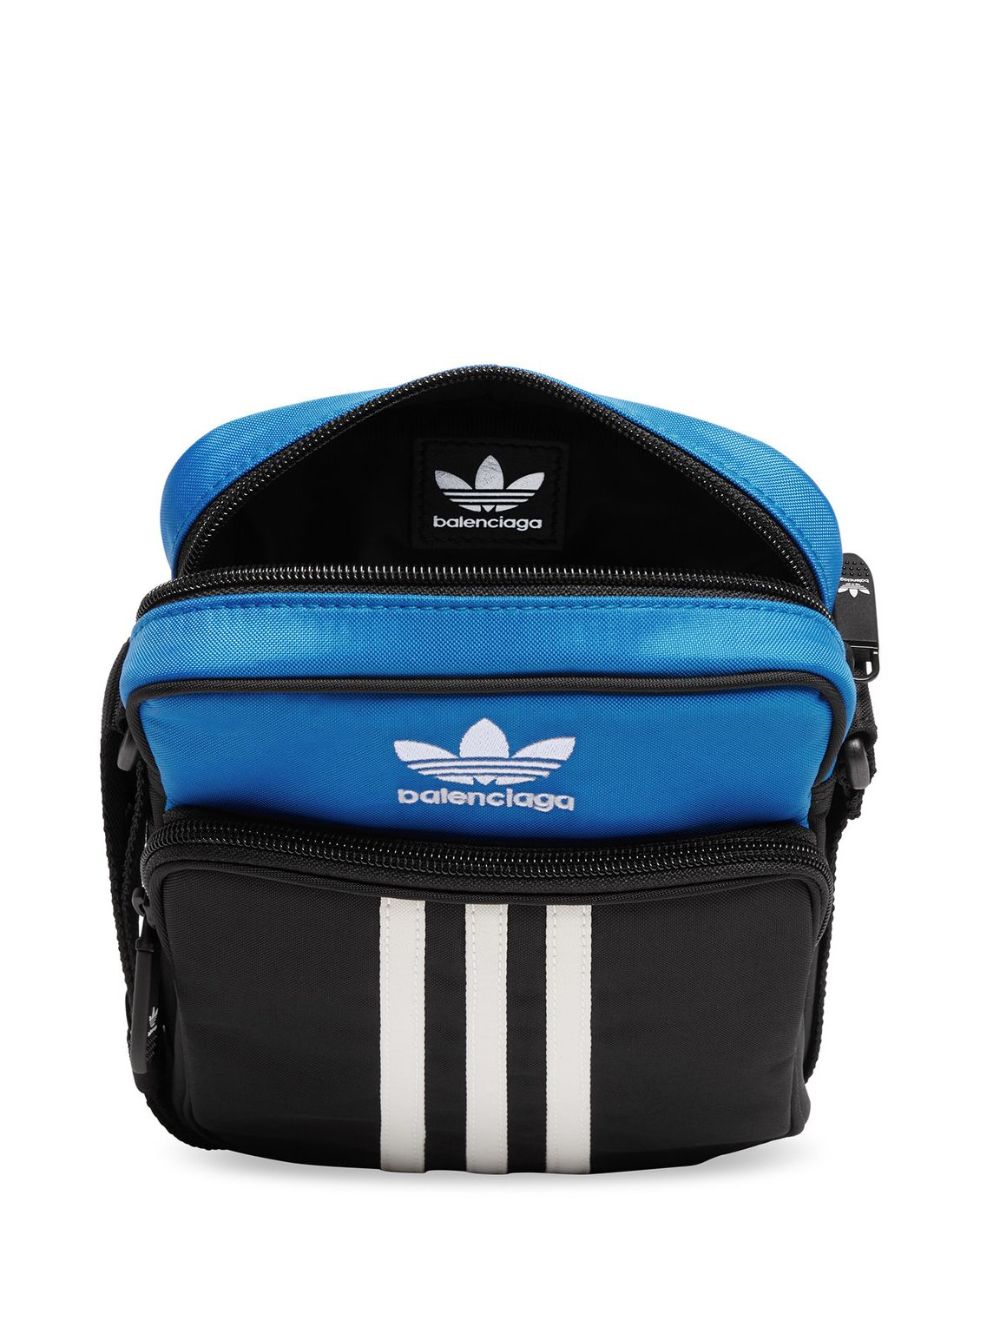 Balenciaga x Adidas Small Bag - Farfetch